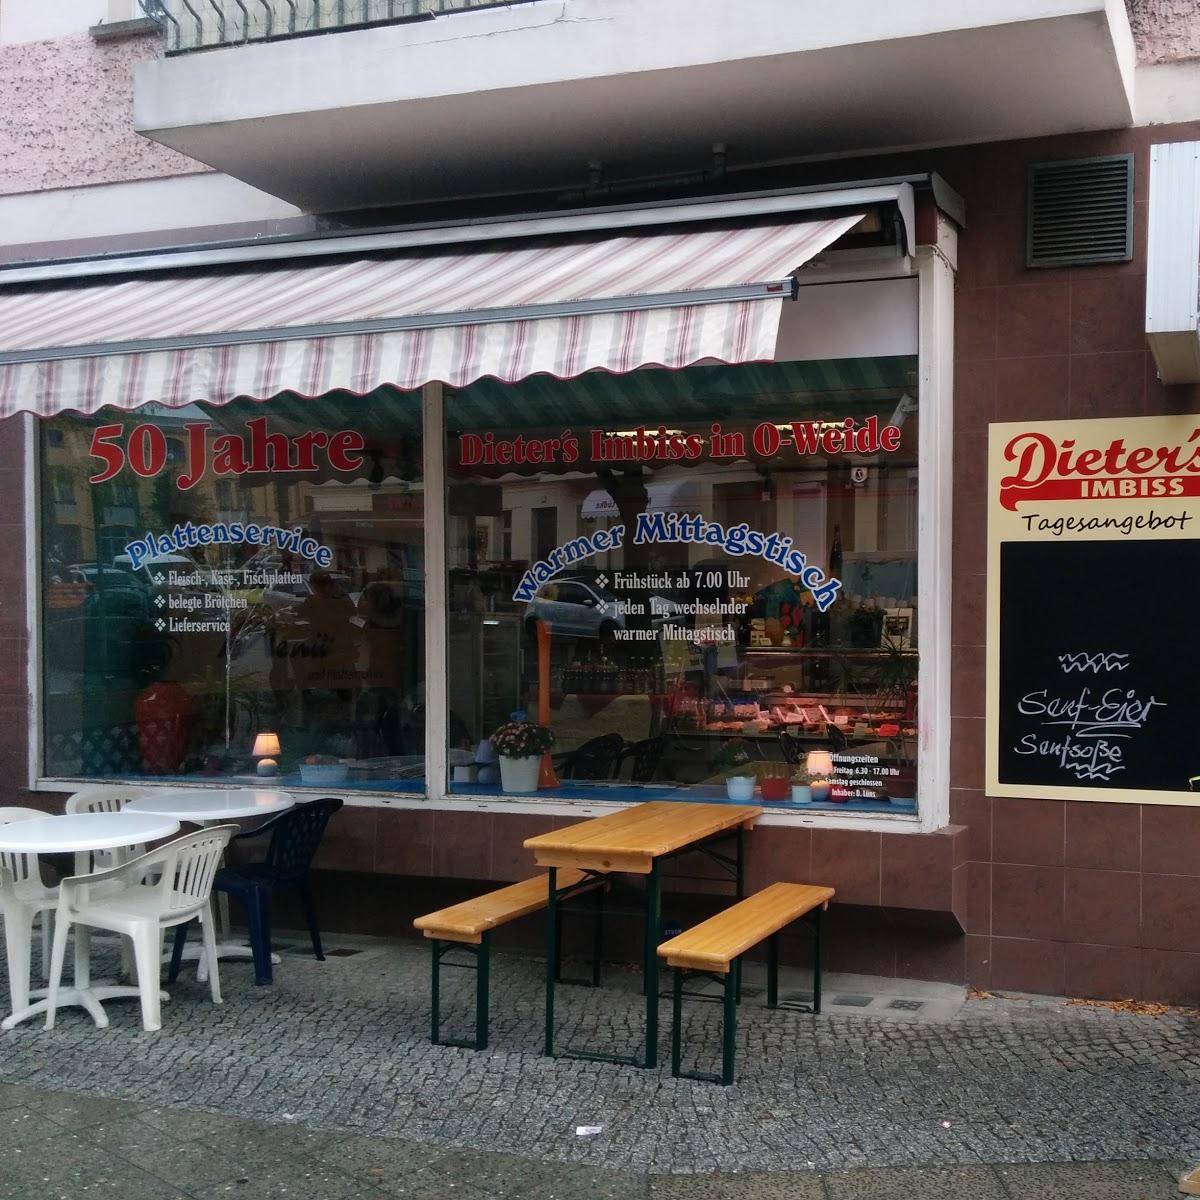 Restaurant "Dieter Lüns" in Berlin